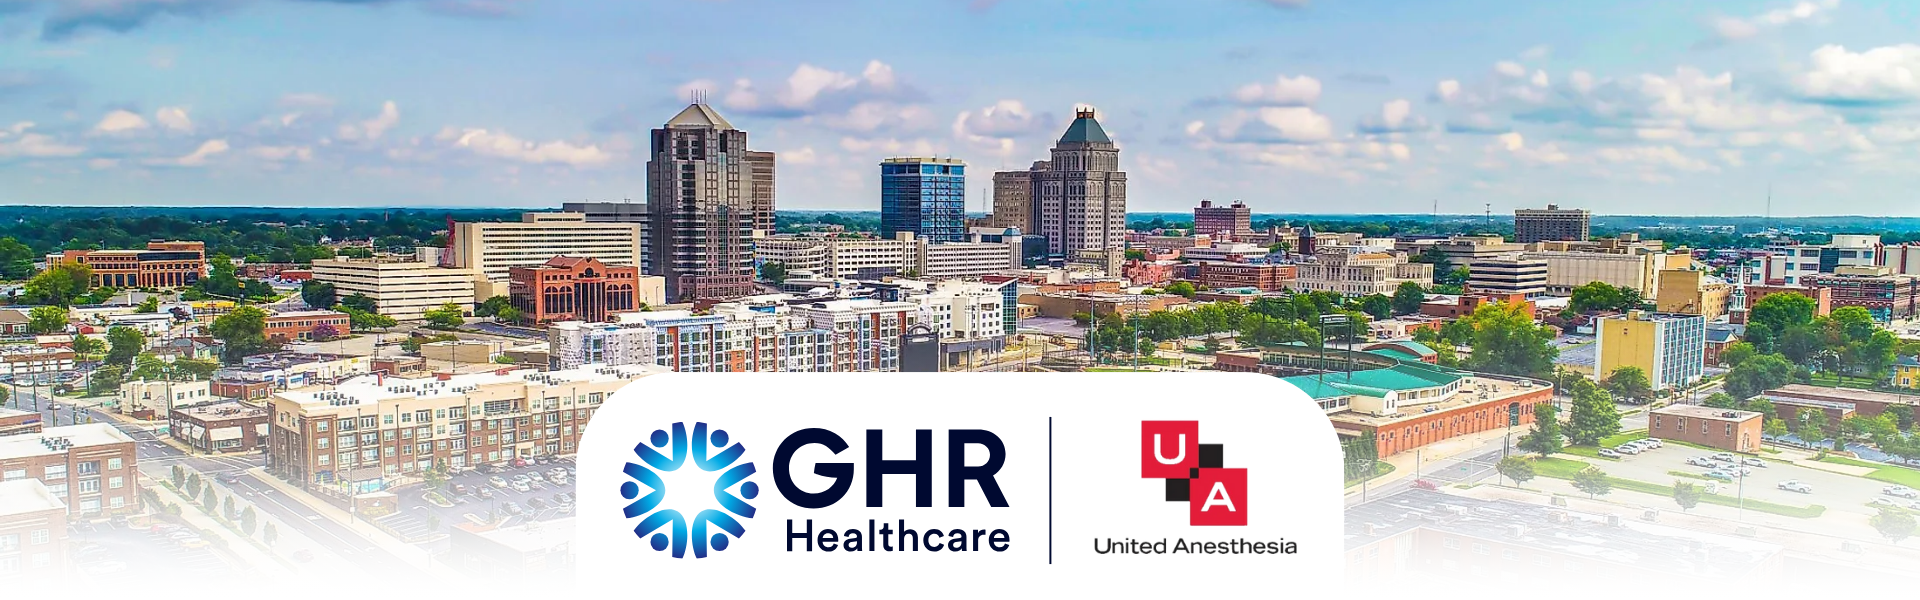 RELEASE: GHR Healthcare Acquires United Anesthesia, Expanding Locum Tenens Services